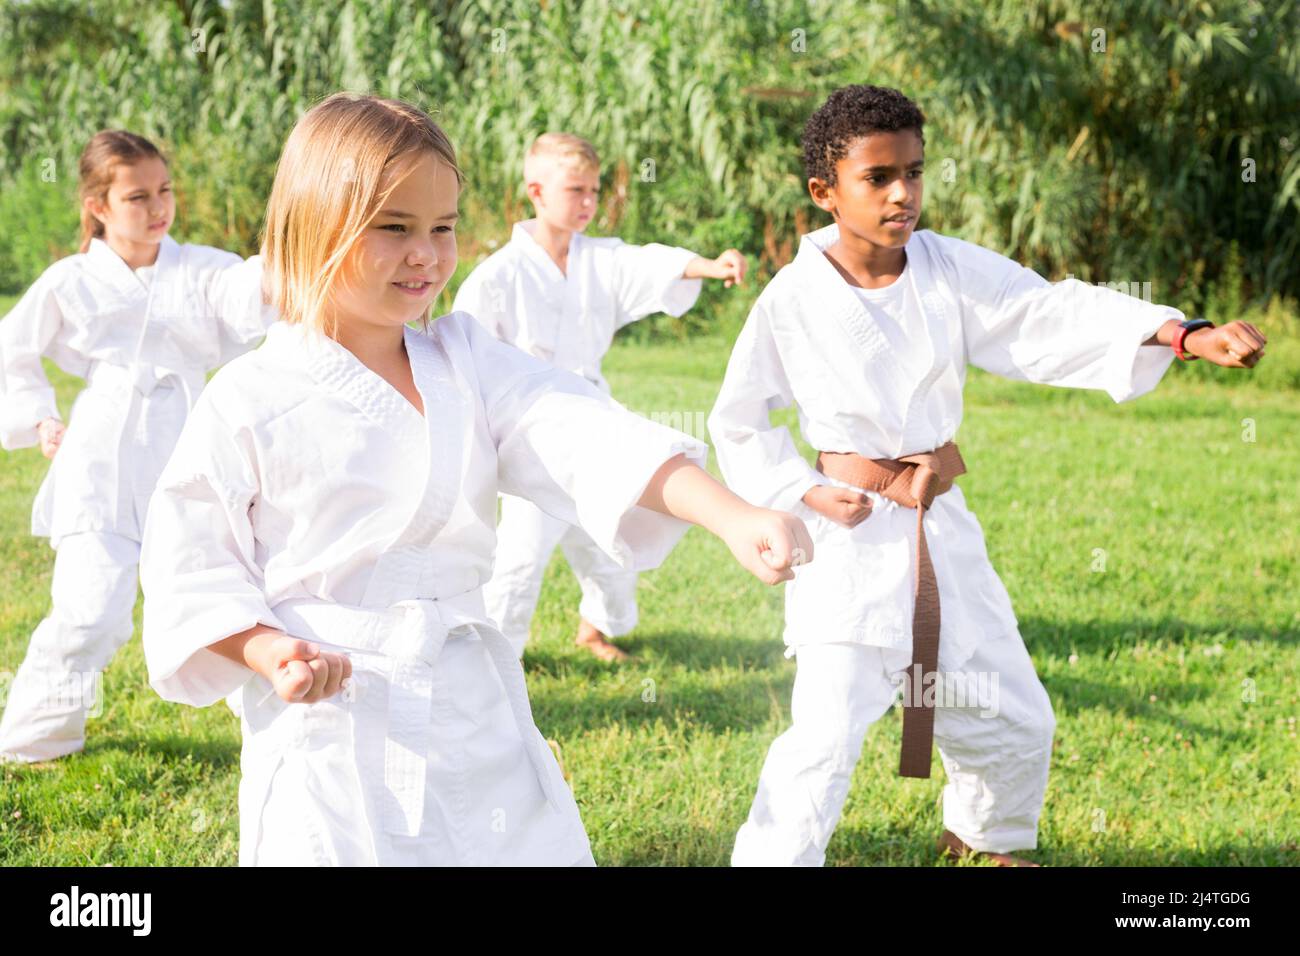 Positive children practicing karate in park Stock Photo - Alamy